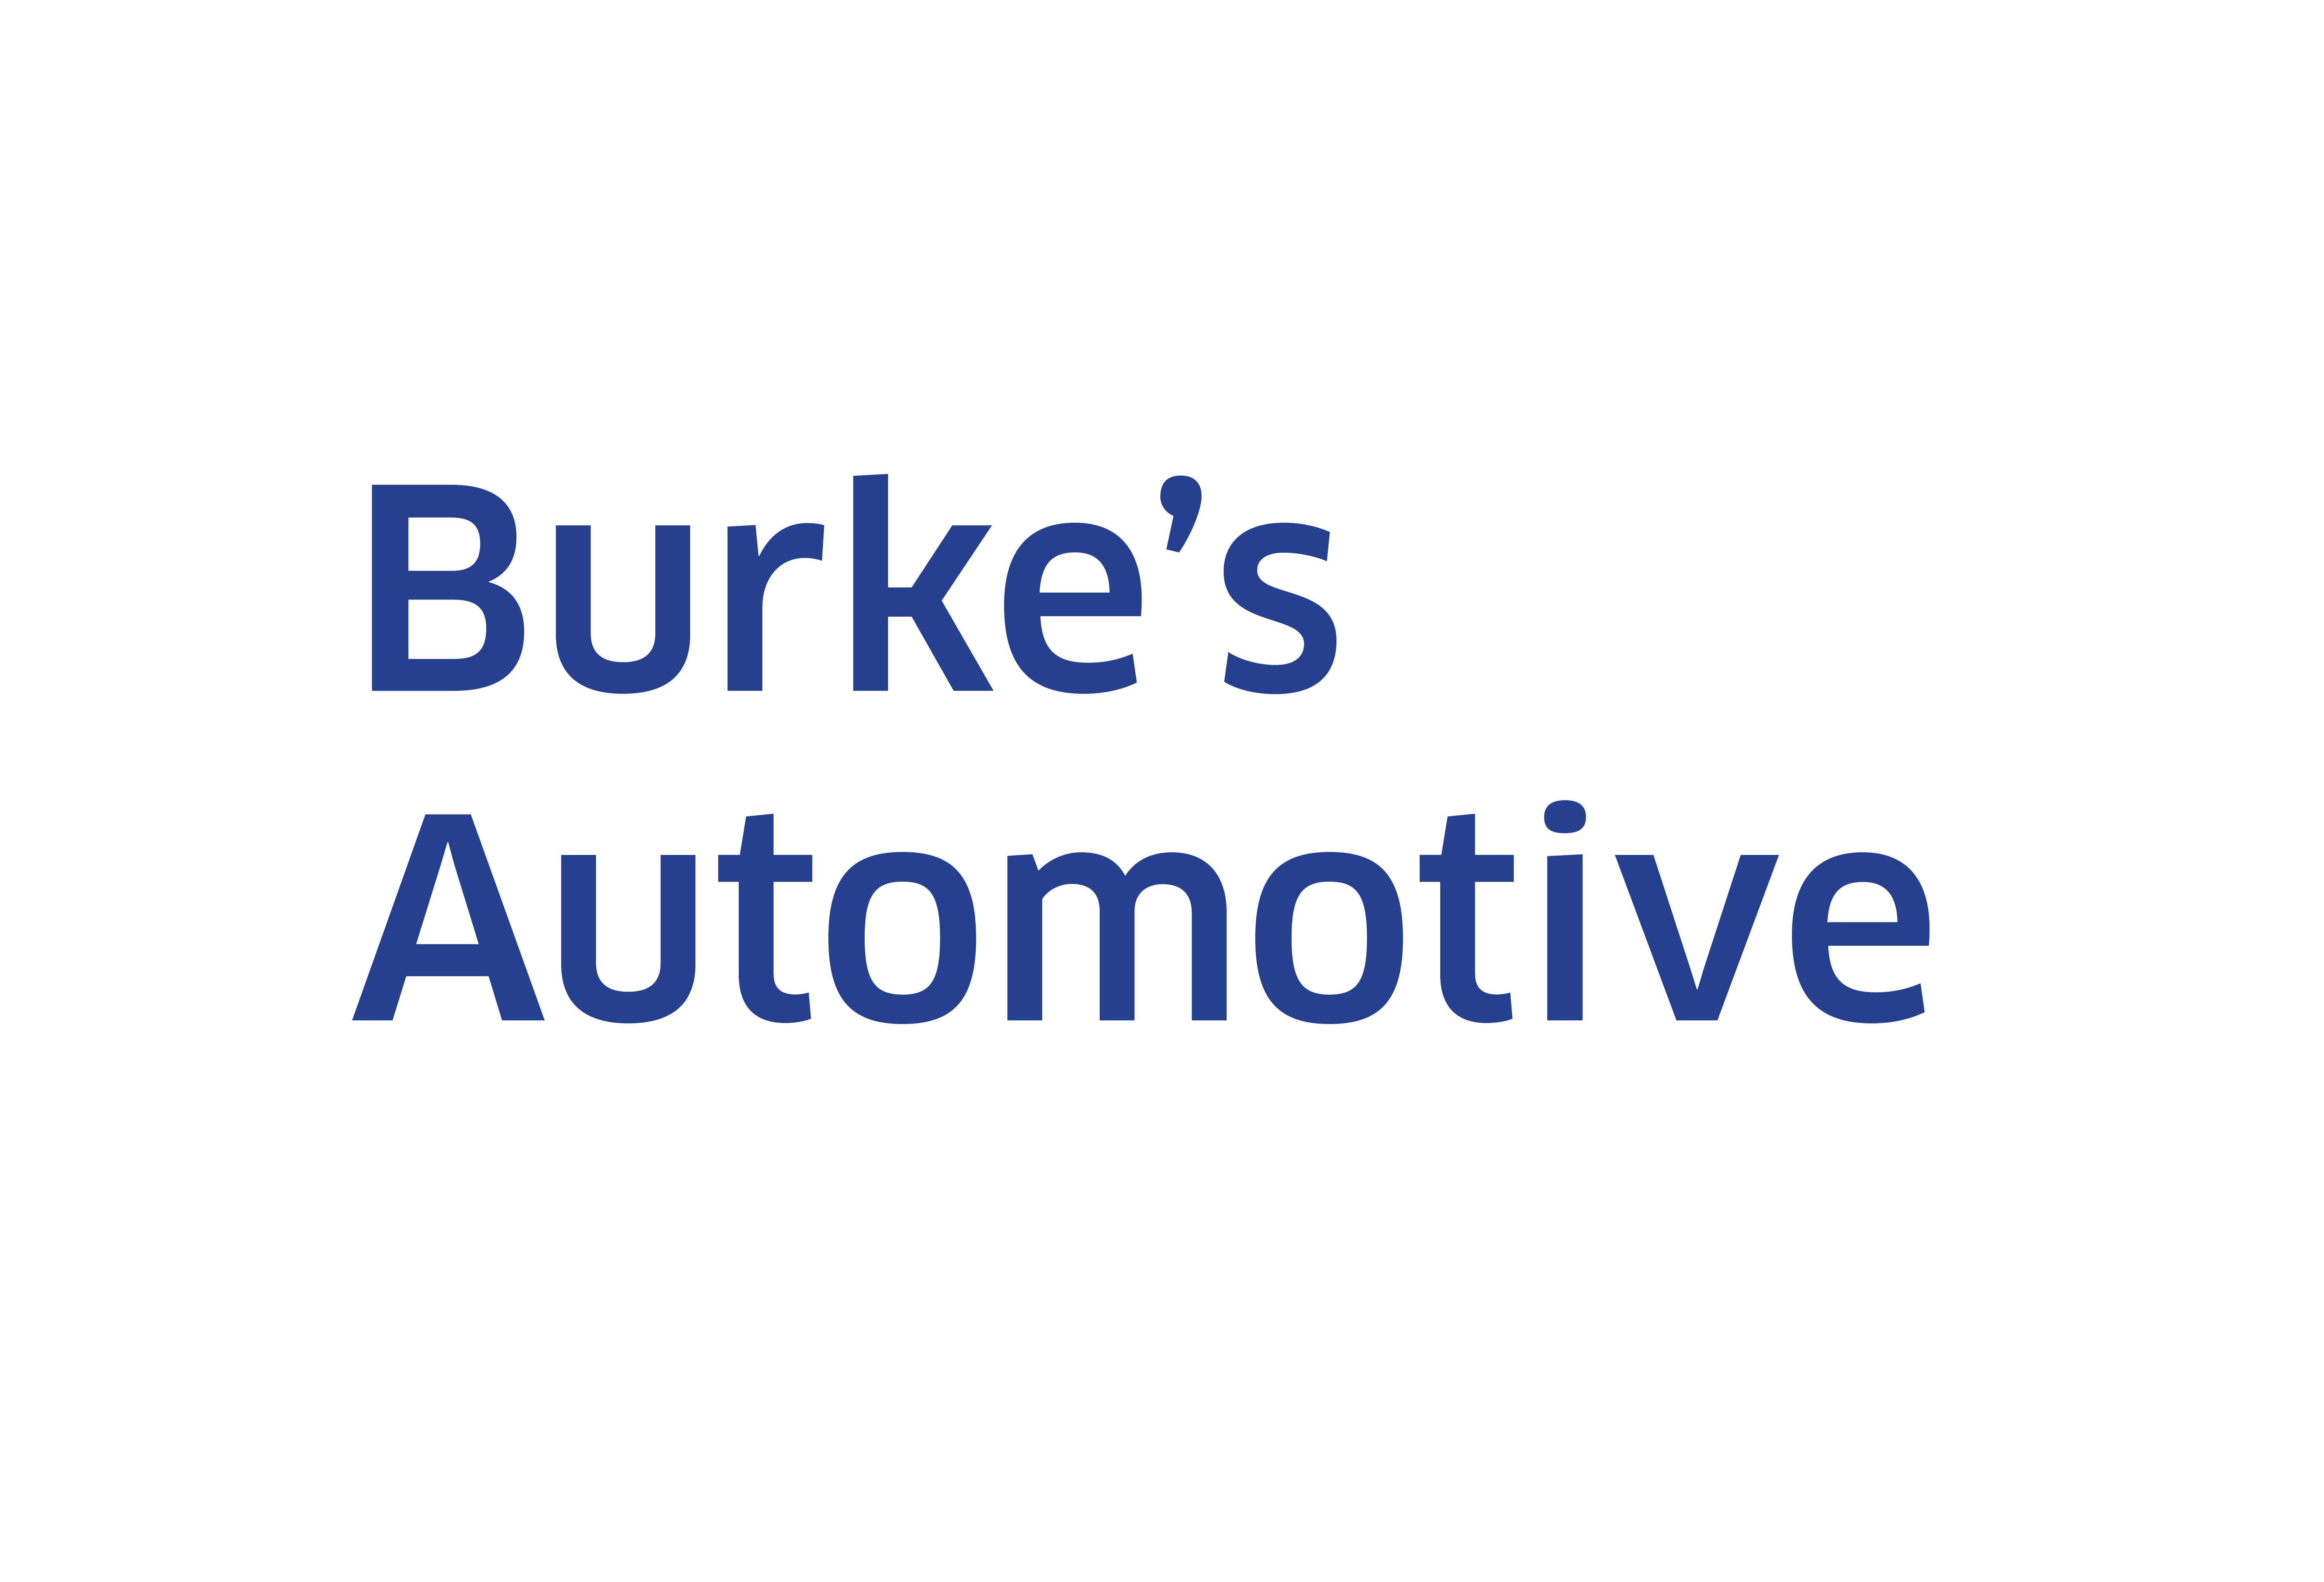 Burke's Automotive